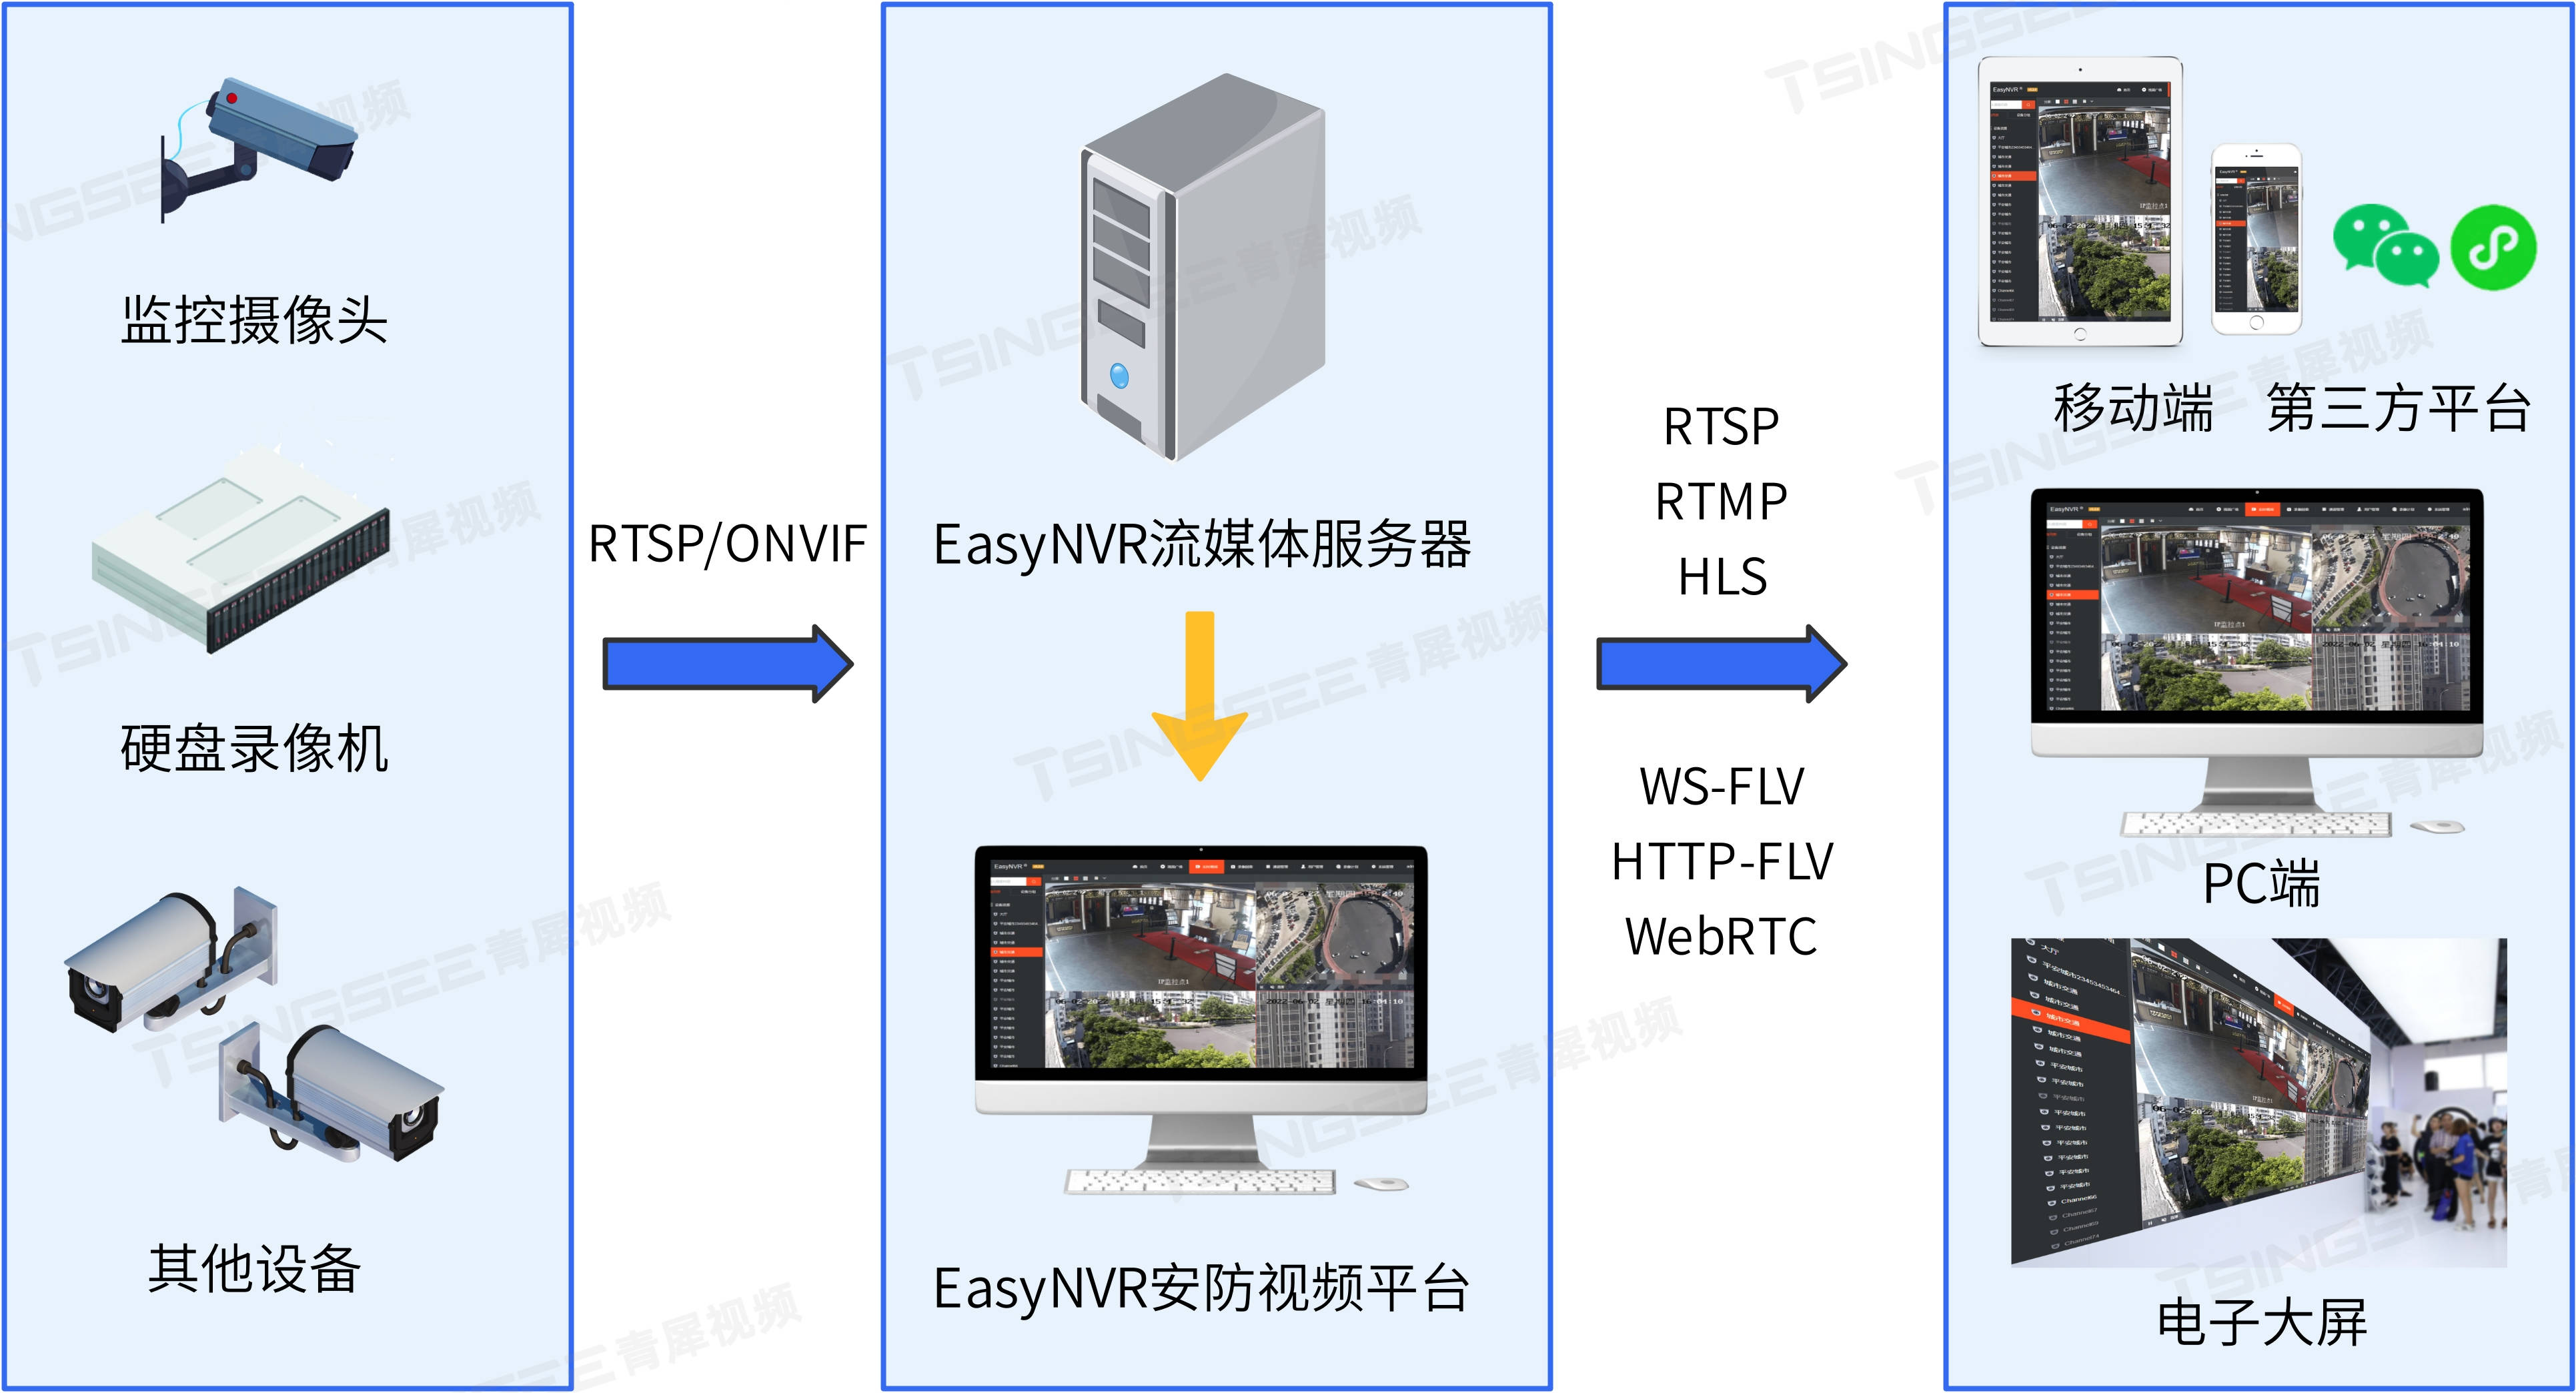 rtsp/onvif安防视频监控云平台easynvr匿名登录相关问题解答